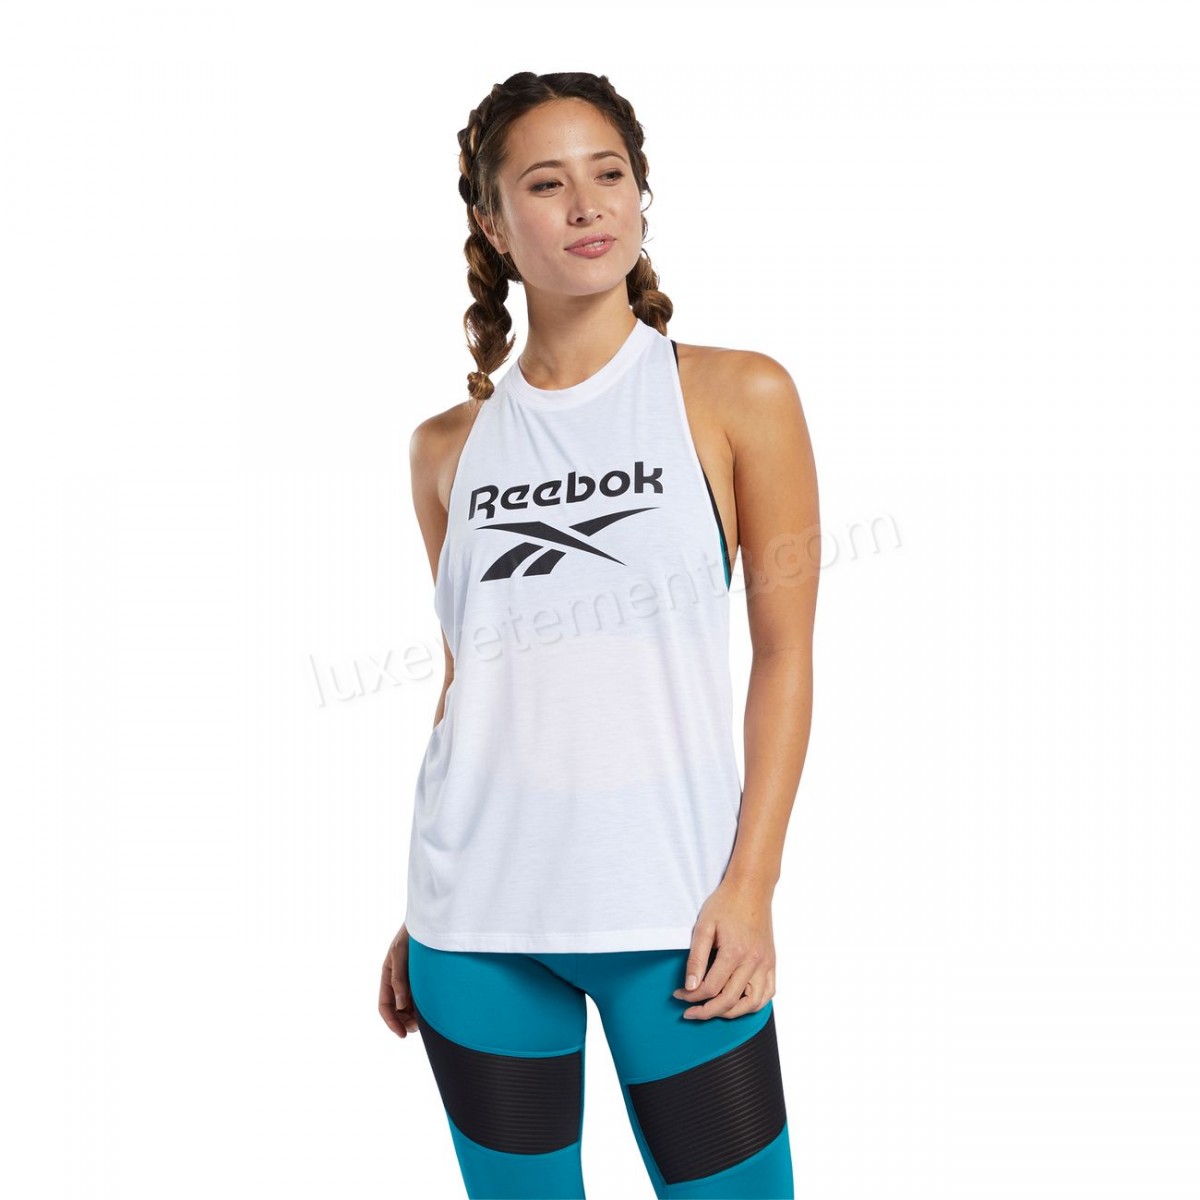 Reebok-Fitness femme REEBOK Débardeur femme Reebok Workout Ready Supremium BL Vente en ligne - -3